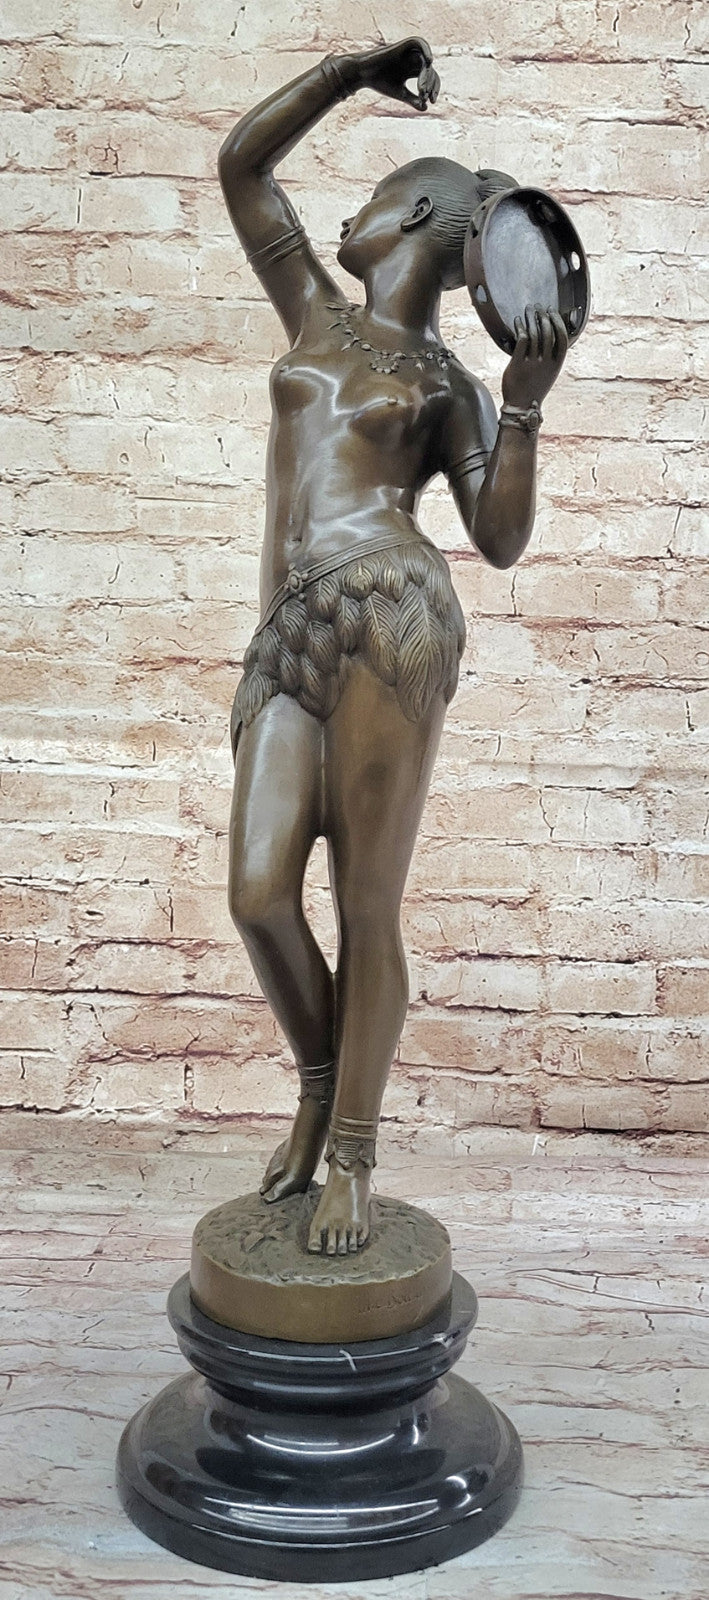 Home Office Showcase: Bouay`s Nude Dancer Bronze Sculpture - Museum Quality